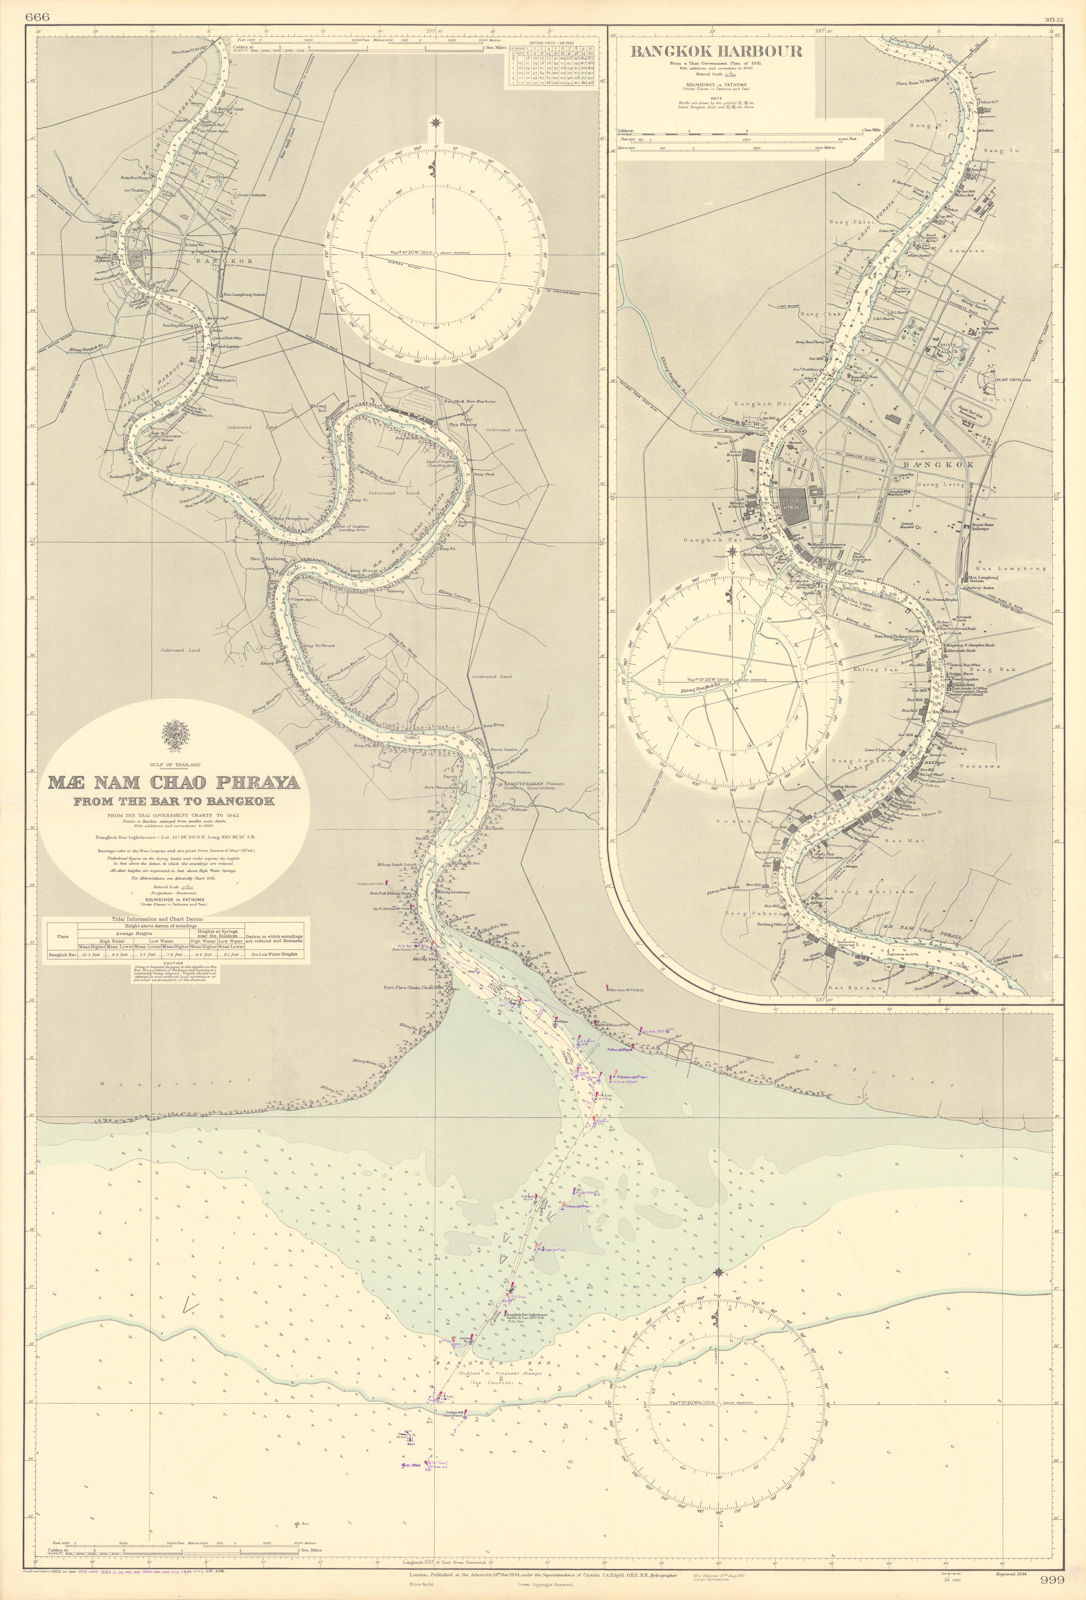 Bangkok Harbour Chao Phraya river Thailand. ADMIRALTY sea chart 1934 (1956) map